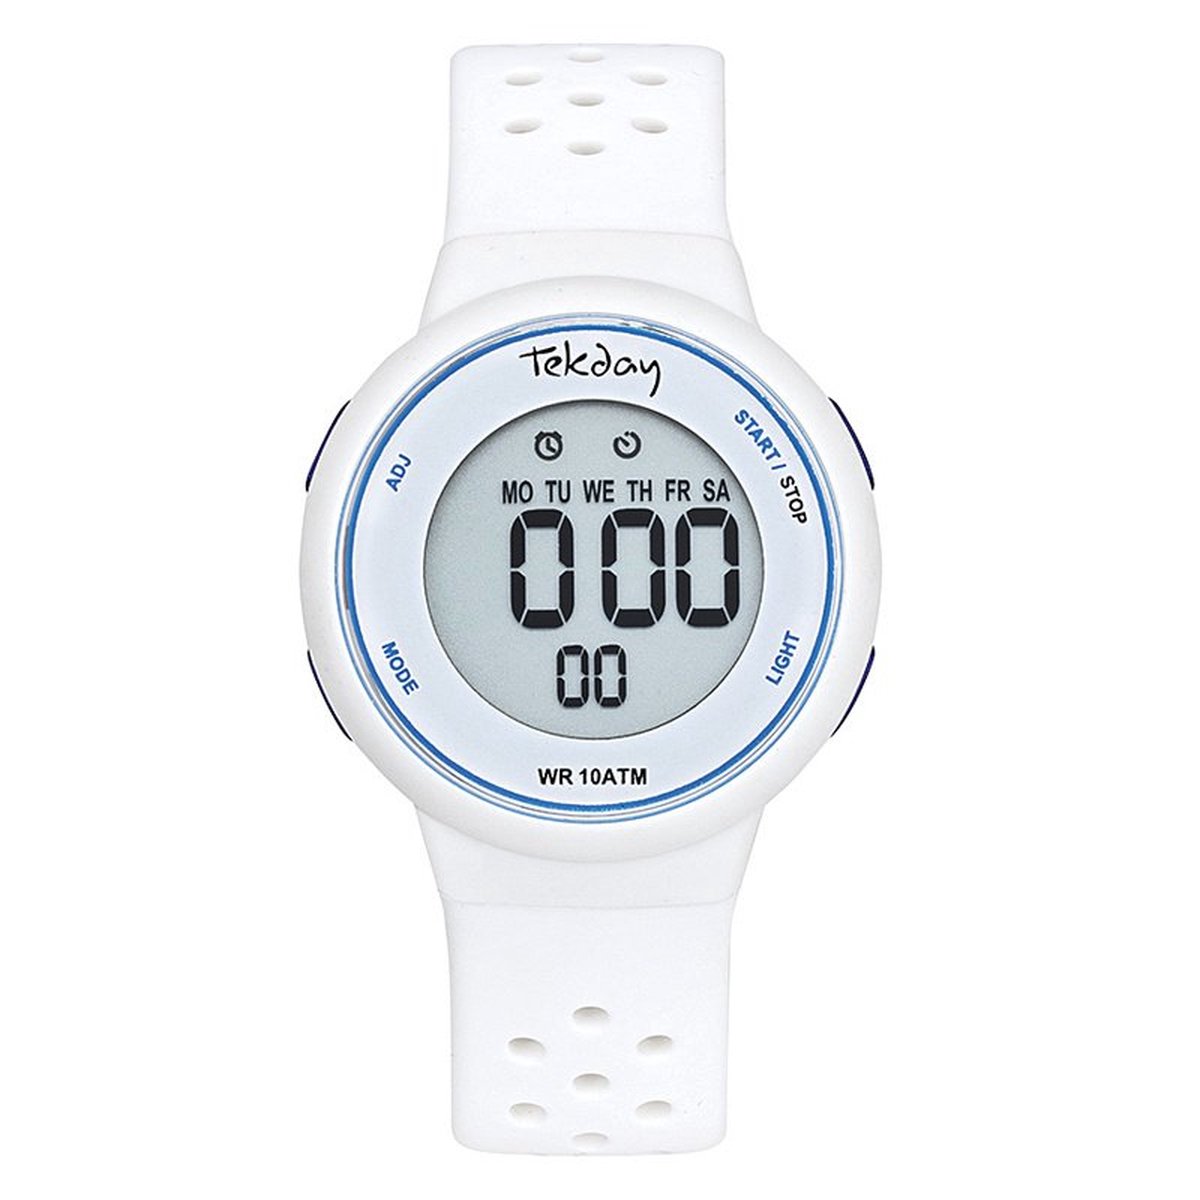 Tekday-Digitaal-Horloge-Waterdicht-Wit-Blauw-Silicone band-Fijn draagcomfort